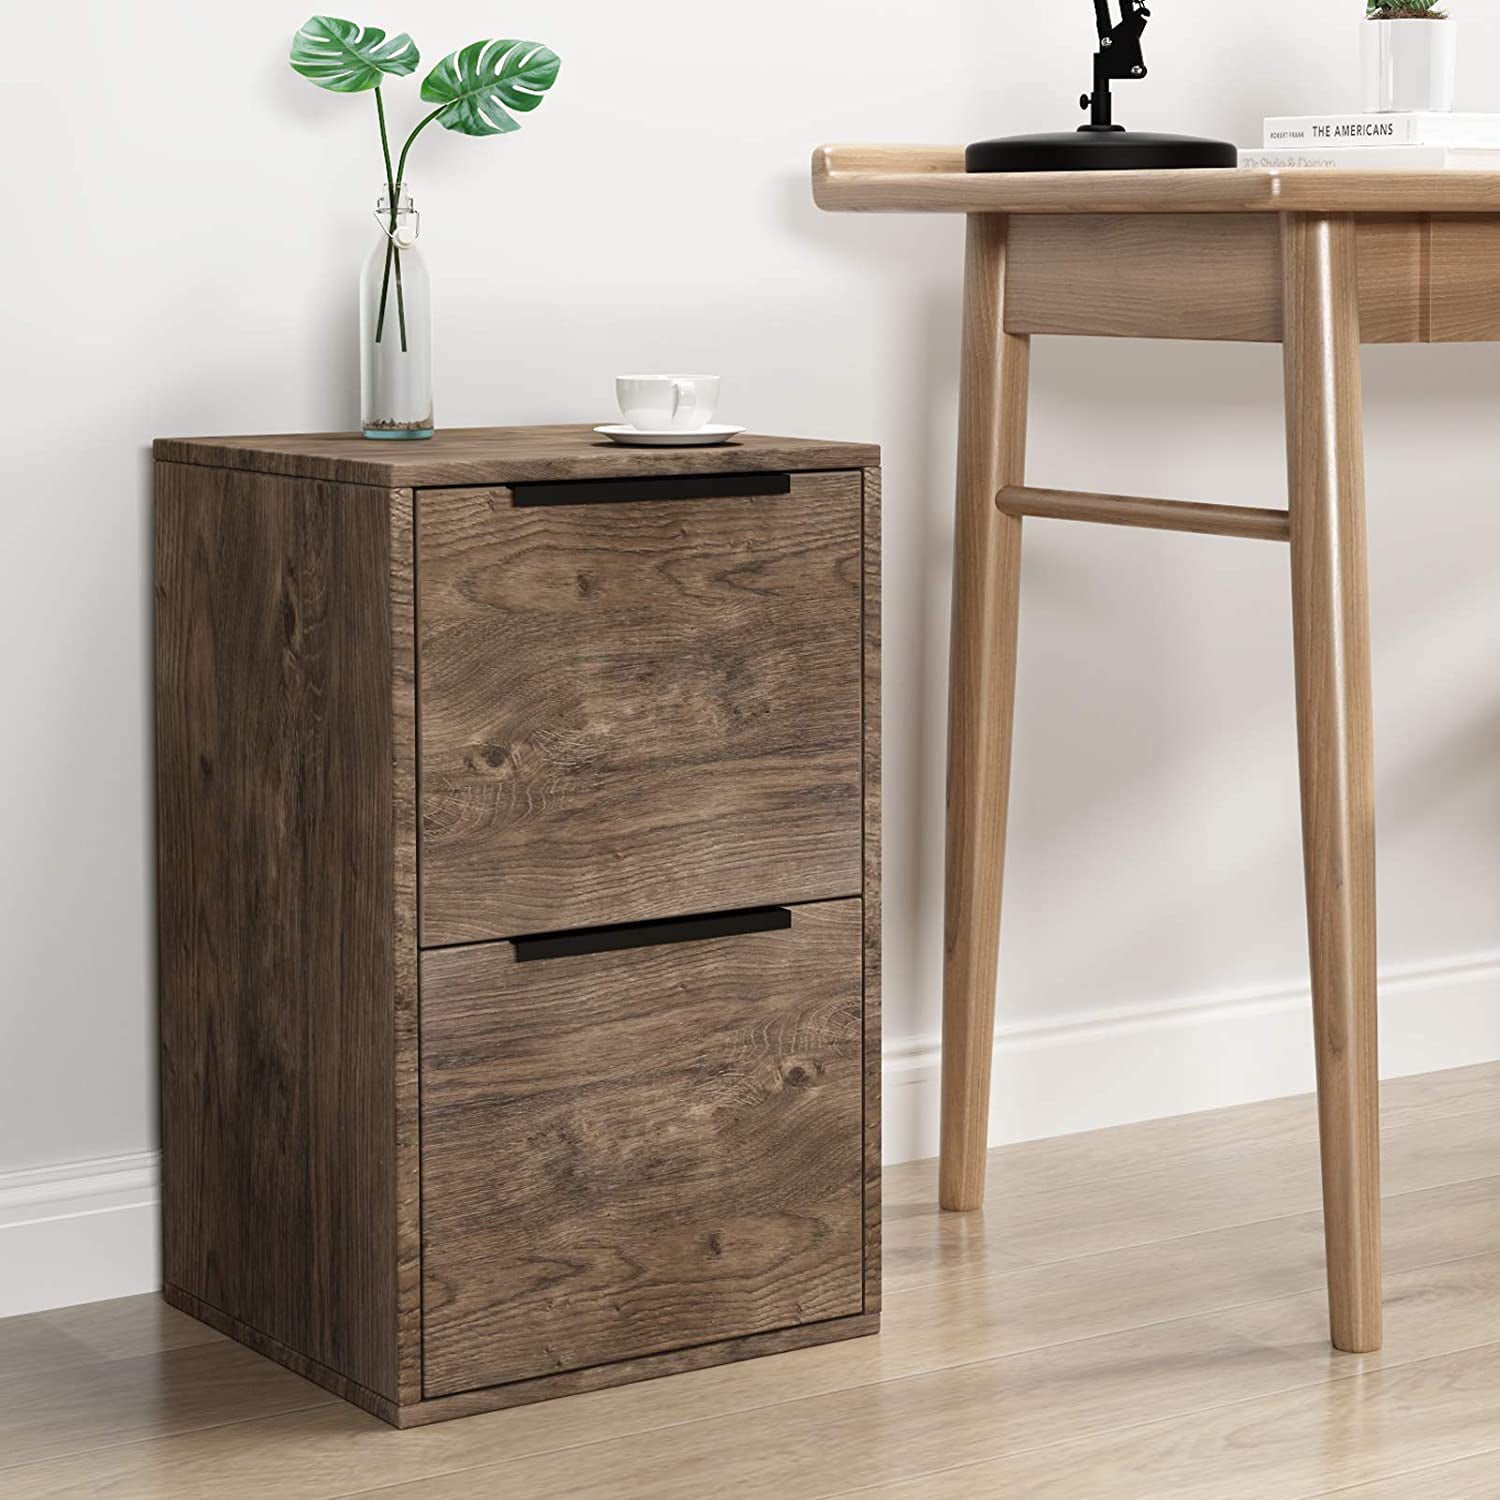 2 Drawer Wood File Cabinet Filing Office Storage Furniture Legal/Letter Size 